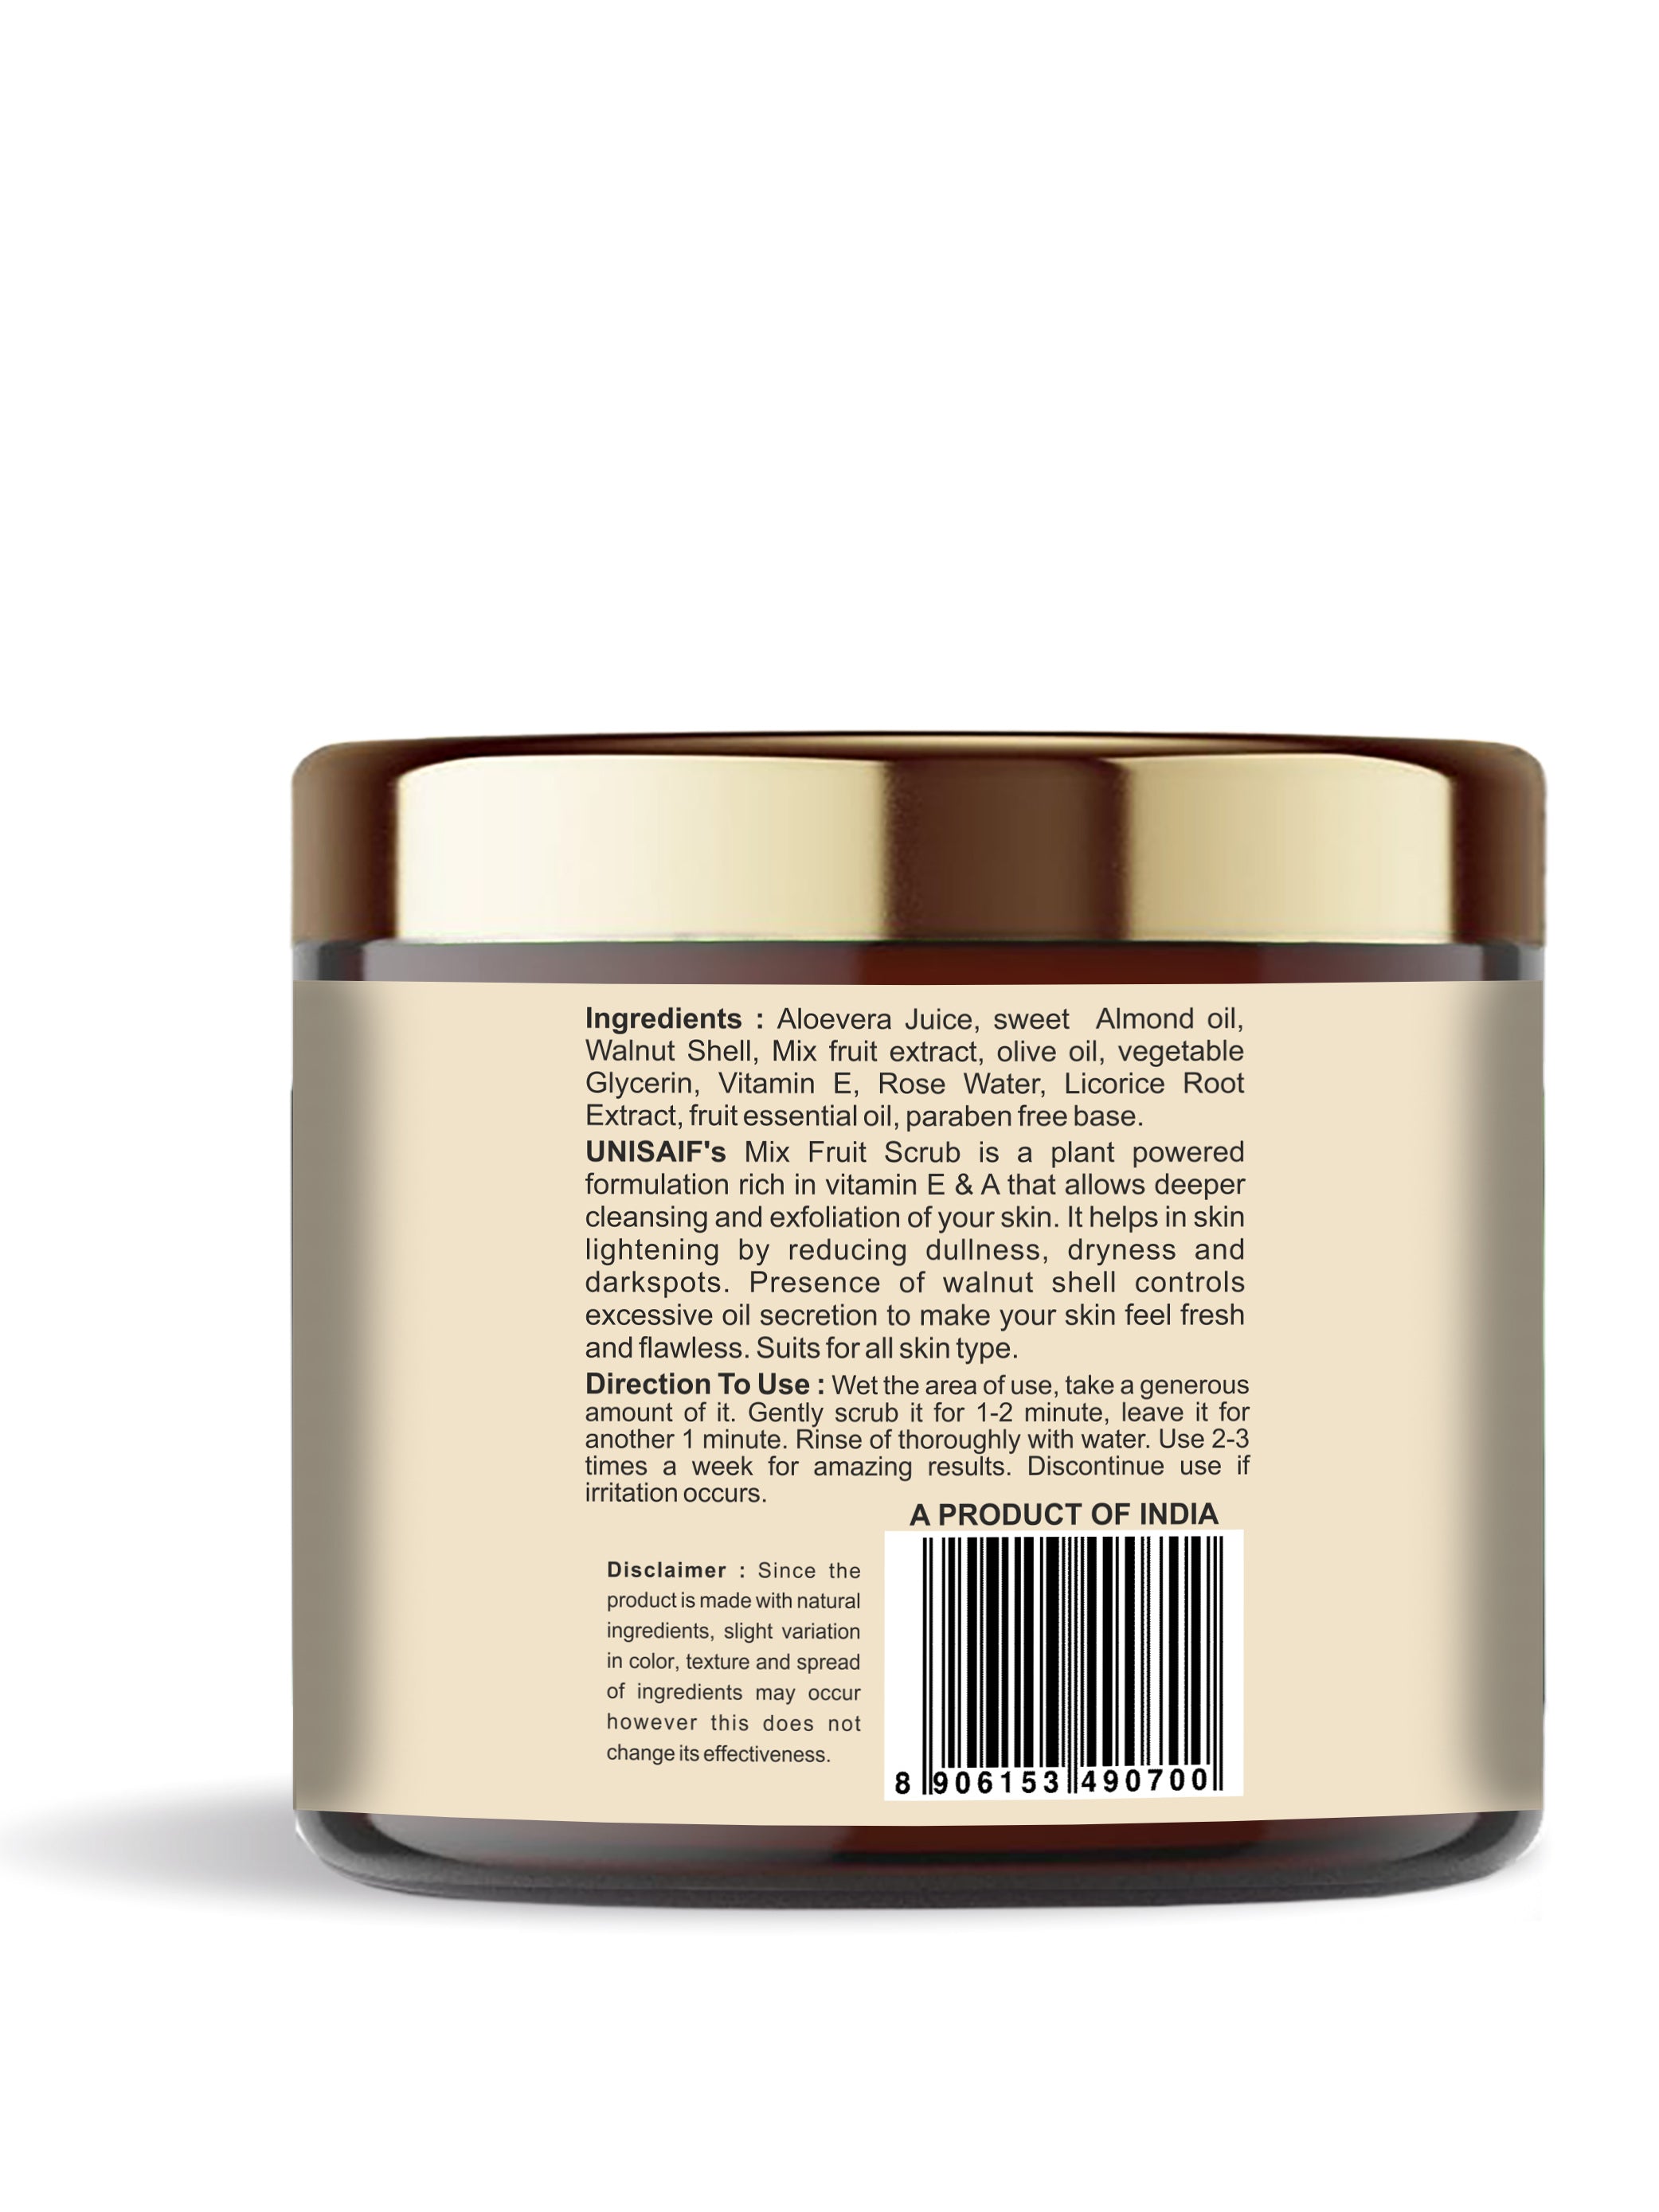 Mix Fruit Organic Scrub (100g) For Skin Toning |Detoxifying |Open pores |Exfoliating